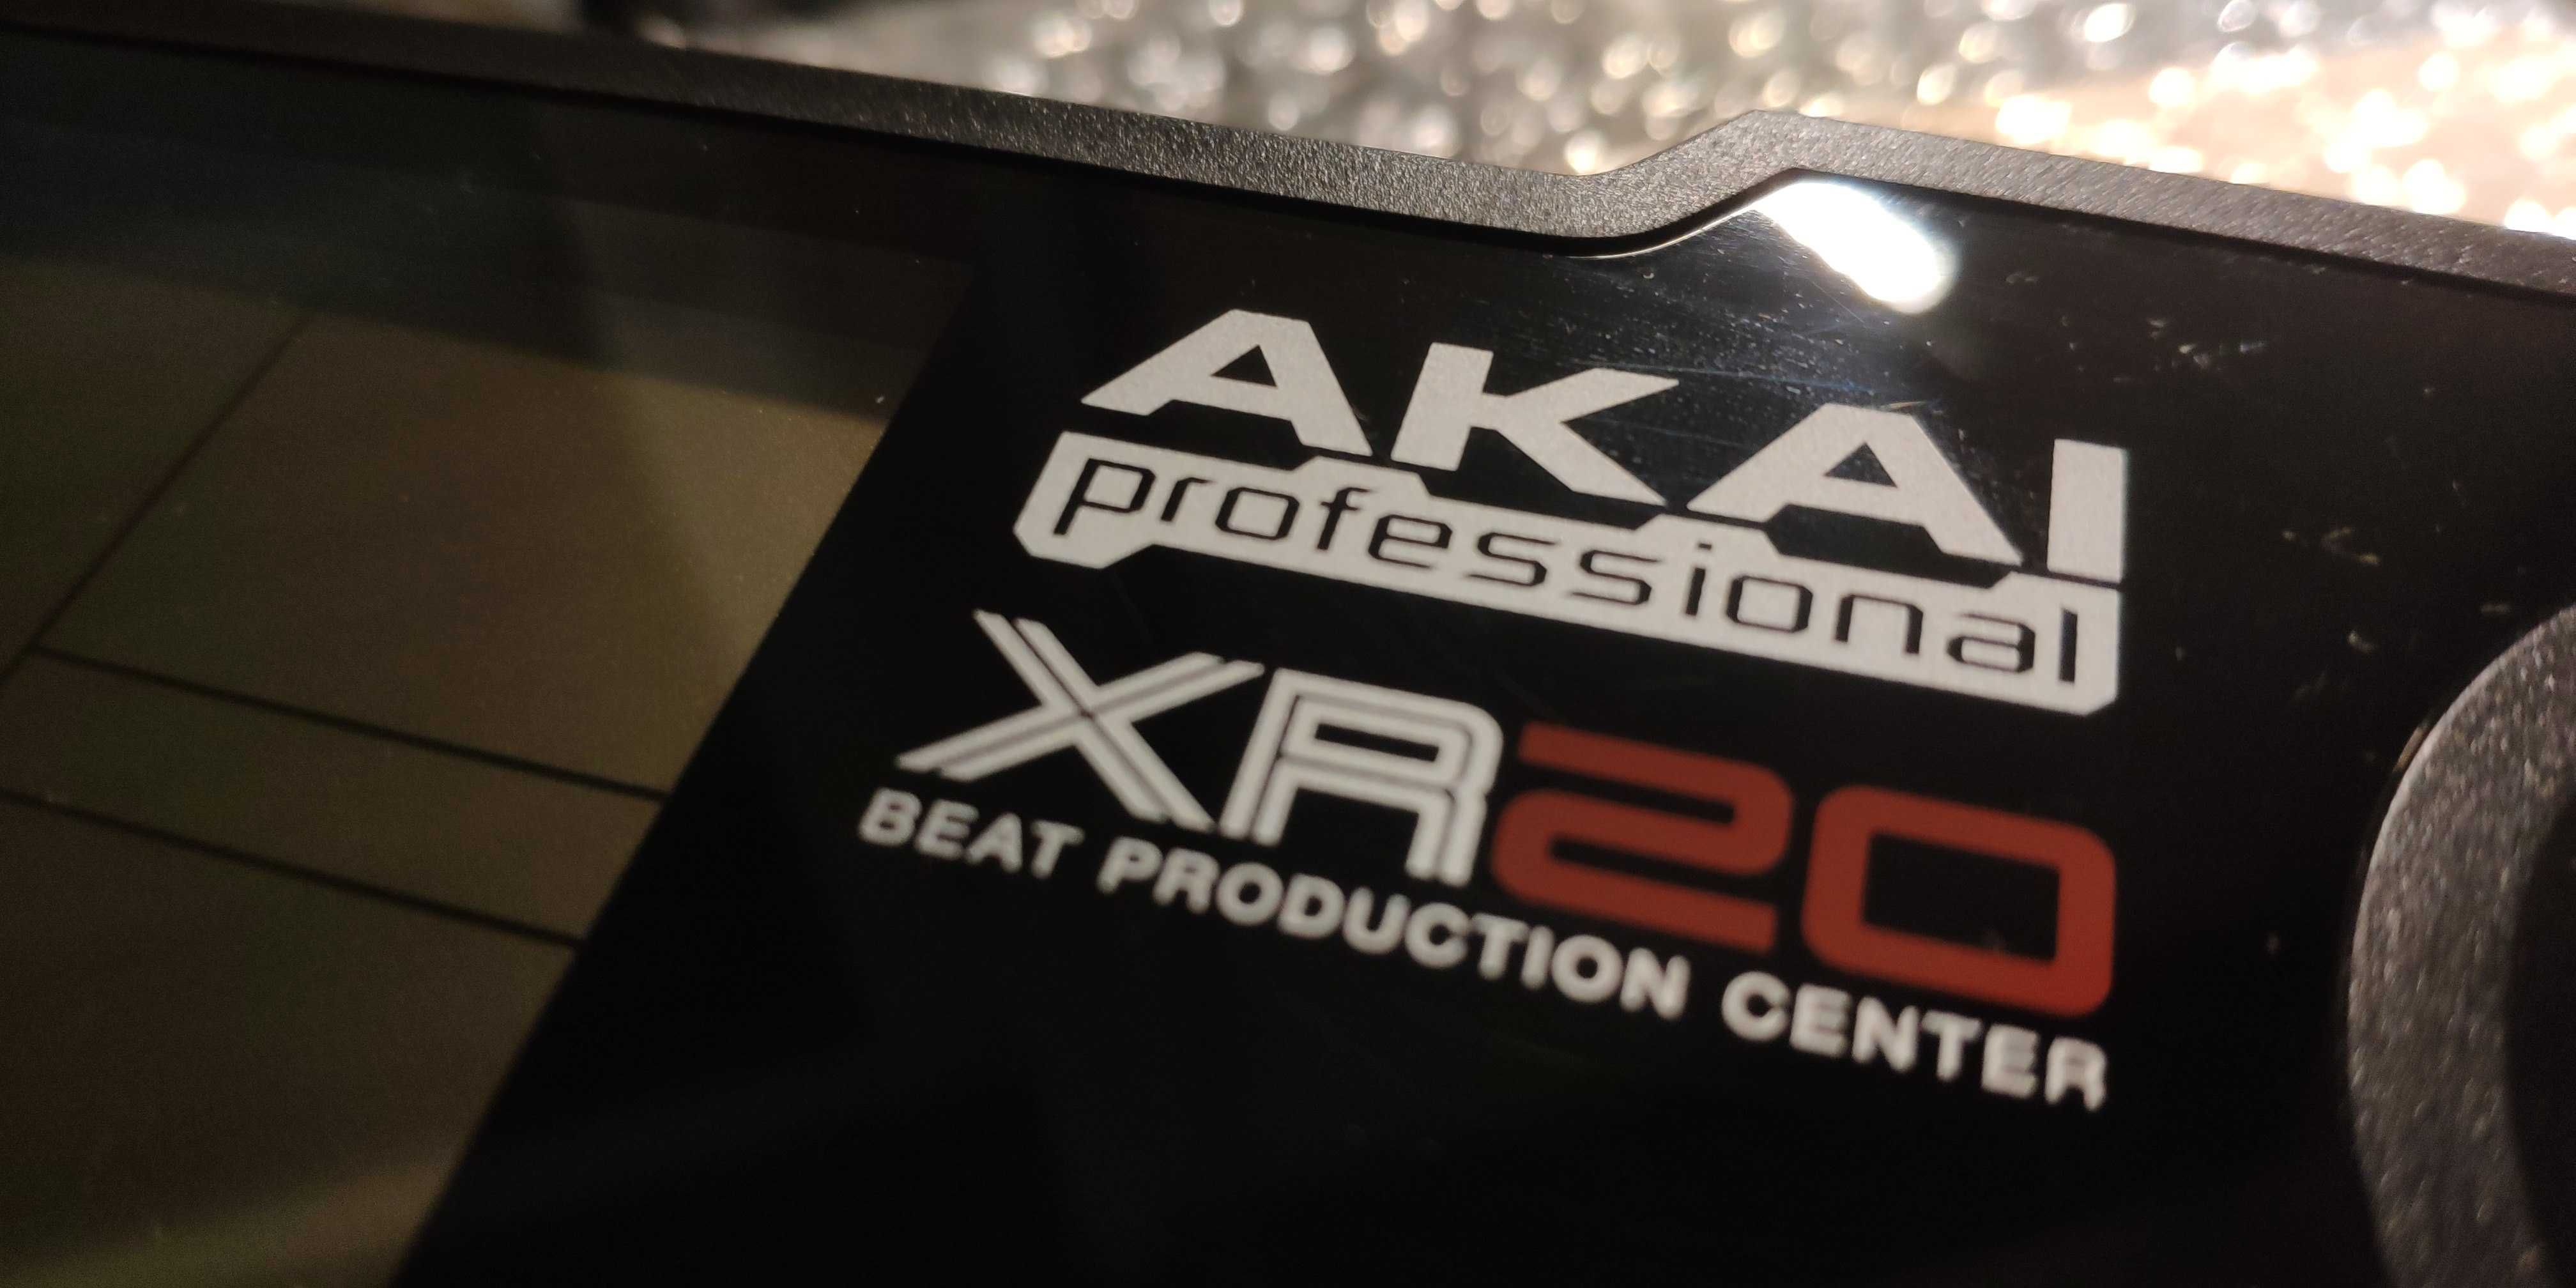 AKAI XR-20 Digital - Drum Machine - Akai Pro